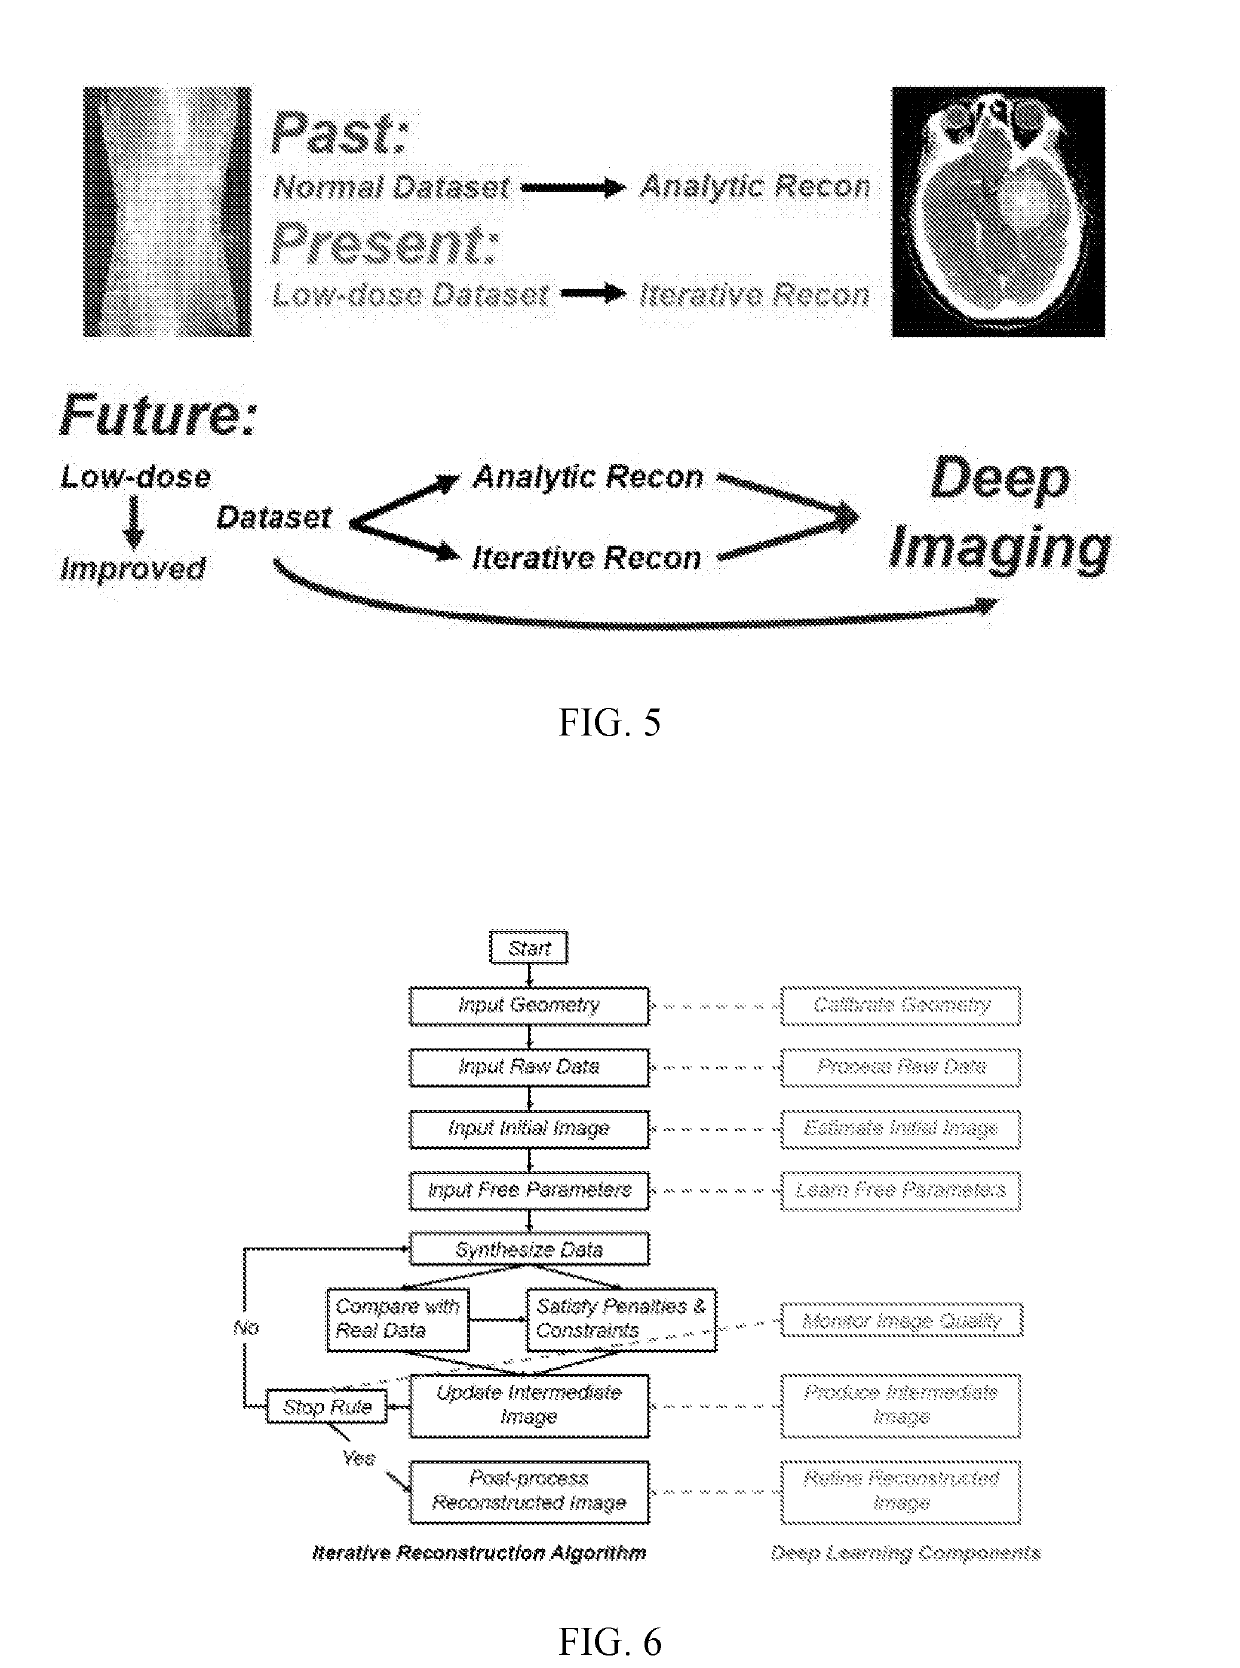 Tomographic image reconstruction via machine learning